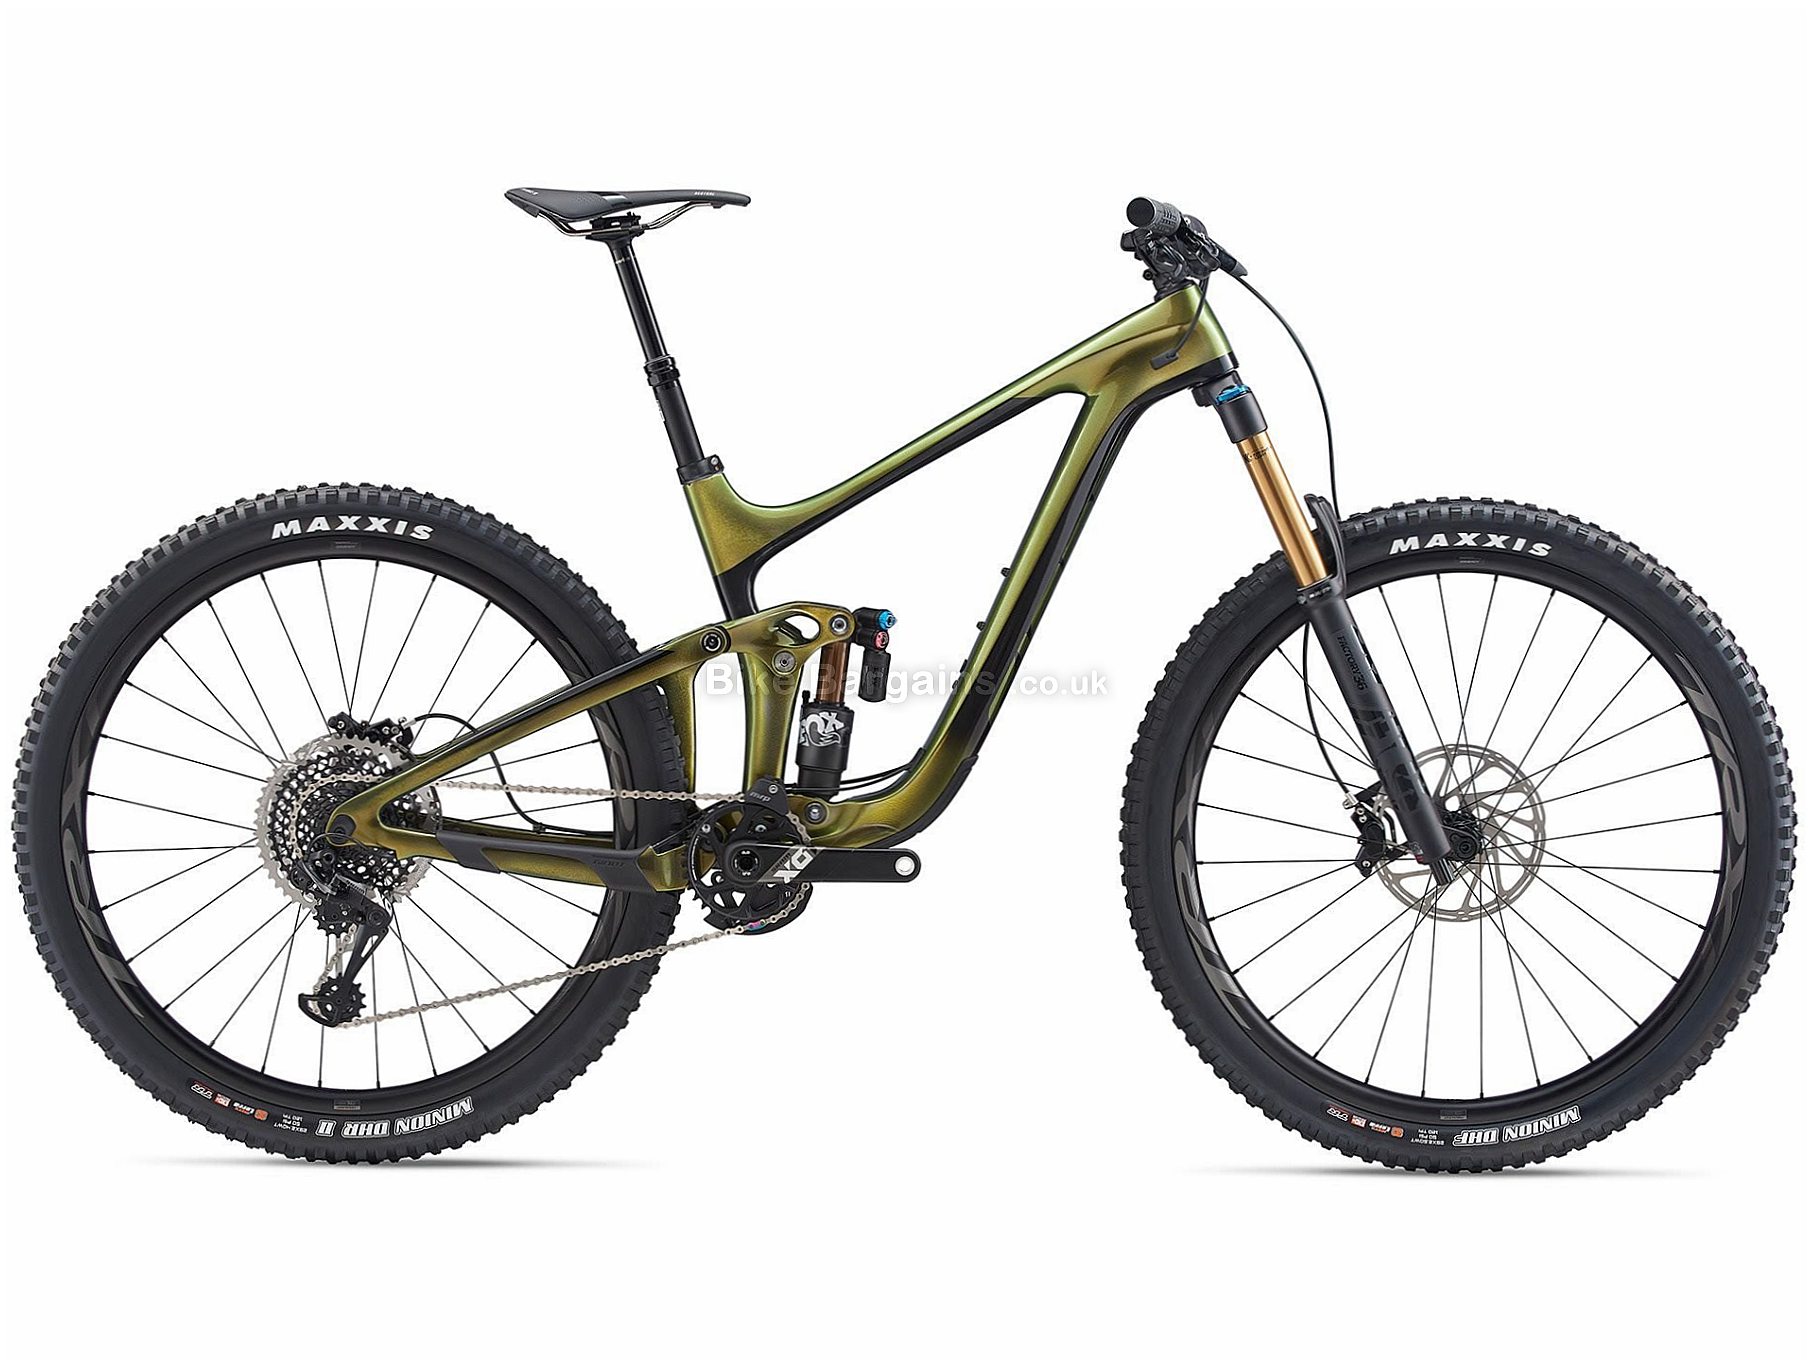 Giant Reign Advanced Pro 0 29er Carbon Suspension Mountain Bike 2020